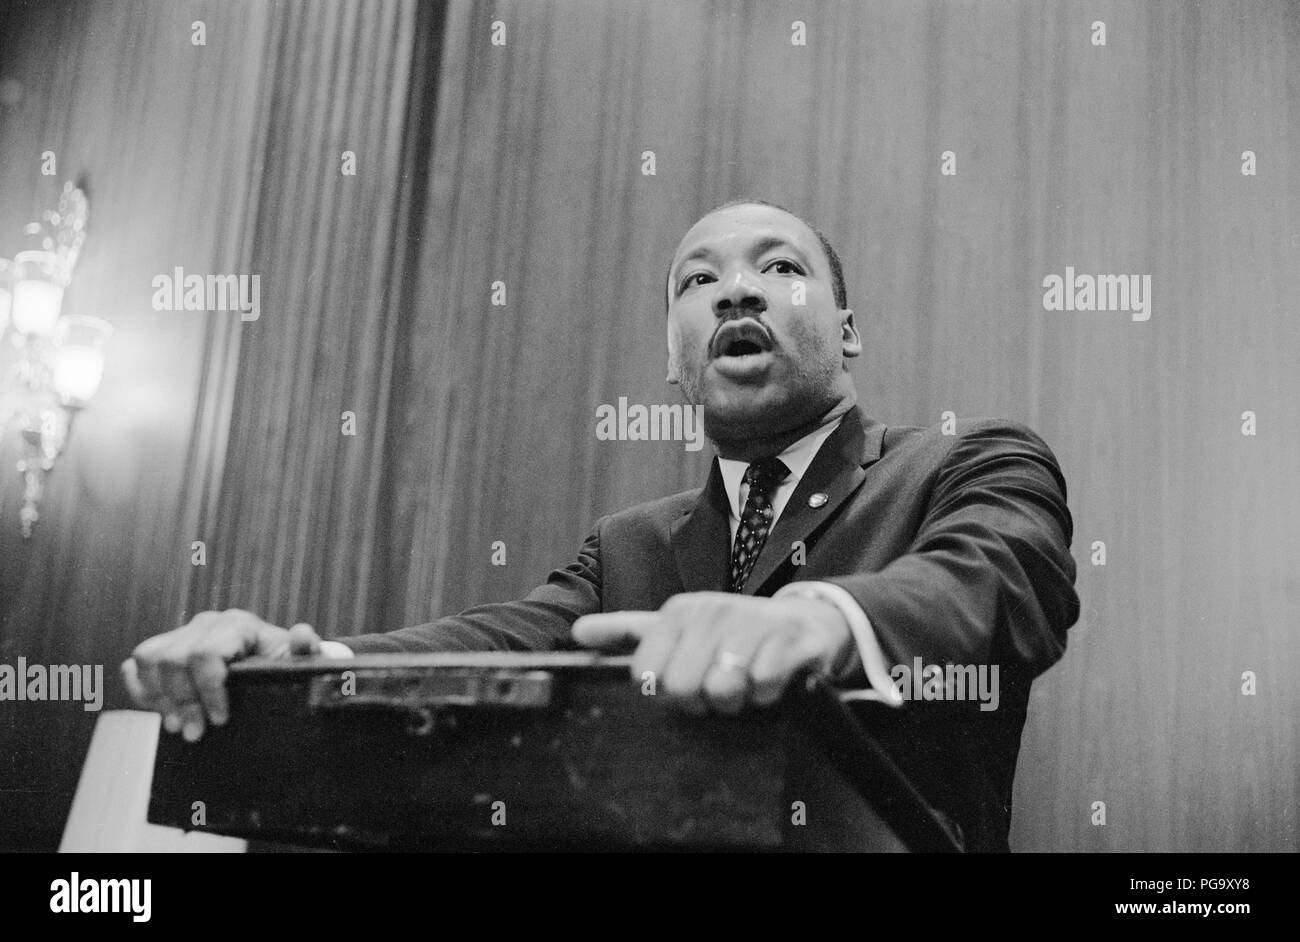 Martin Luther King Jr. - Marzo de 1964 Foto de stock